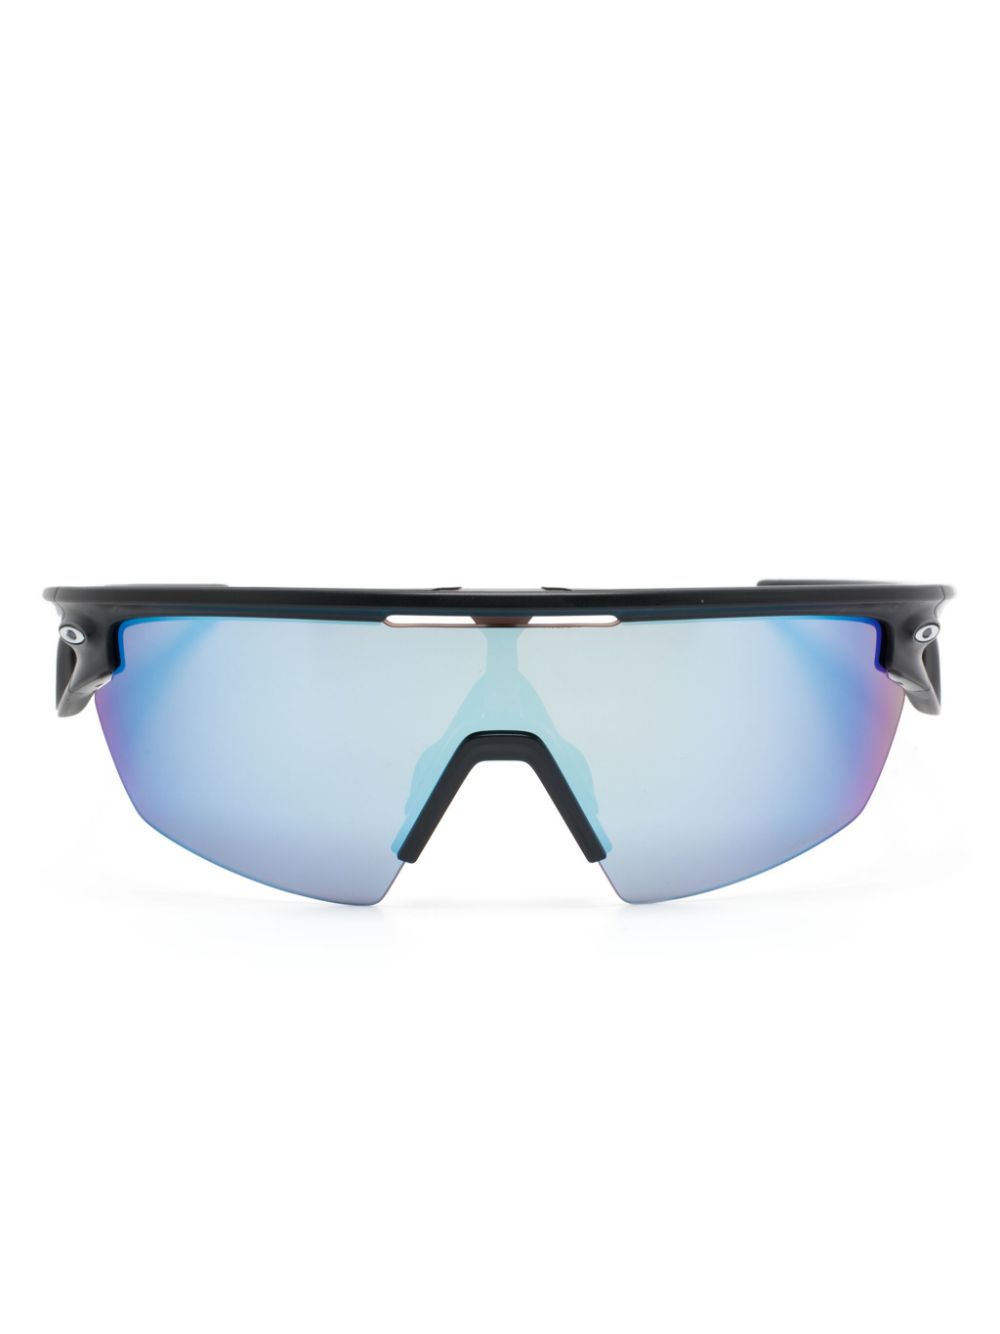 Sphaera oversize-frame sunglasses<BR/><BR/><BR/>